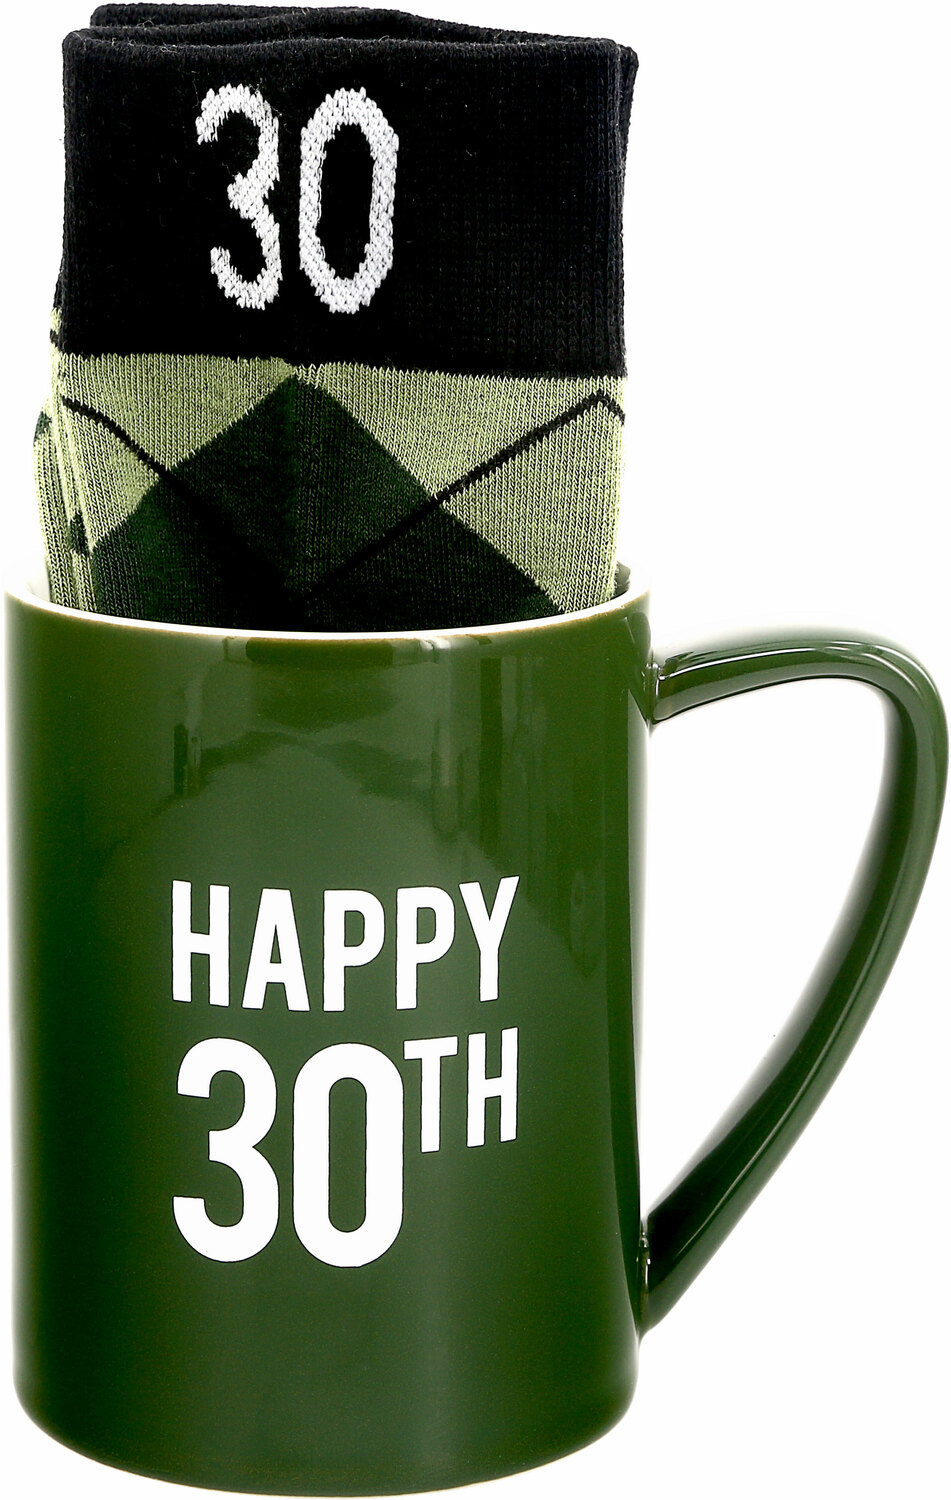 Happy 30th by Man Made - Happy 30th - 18 oz Mug and Sock Set